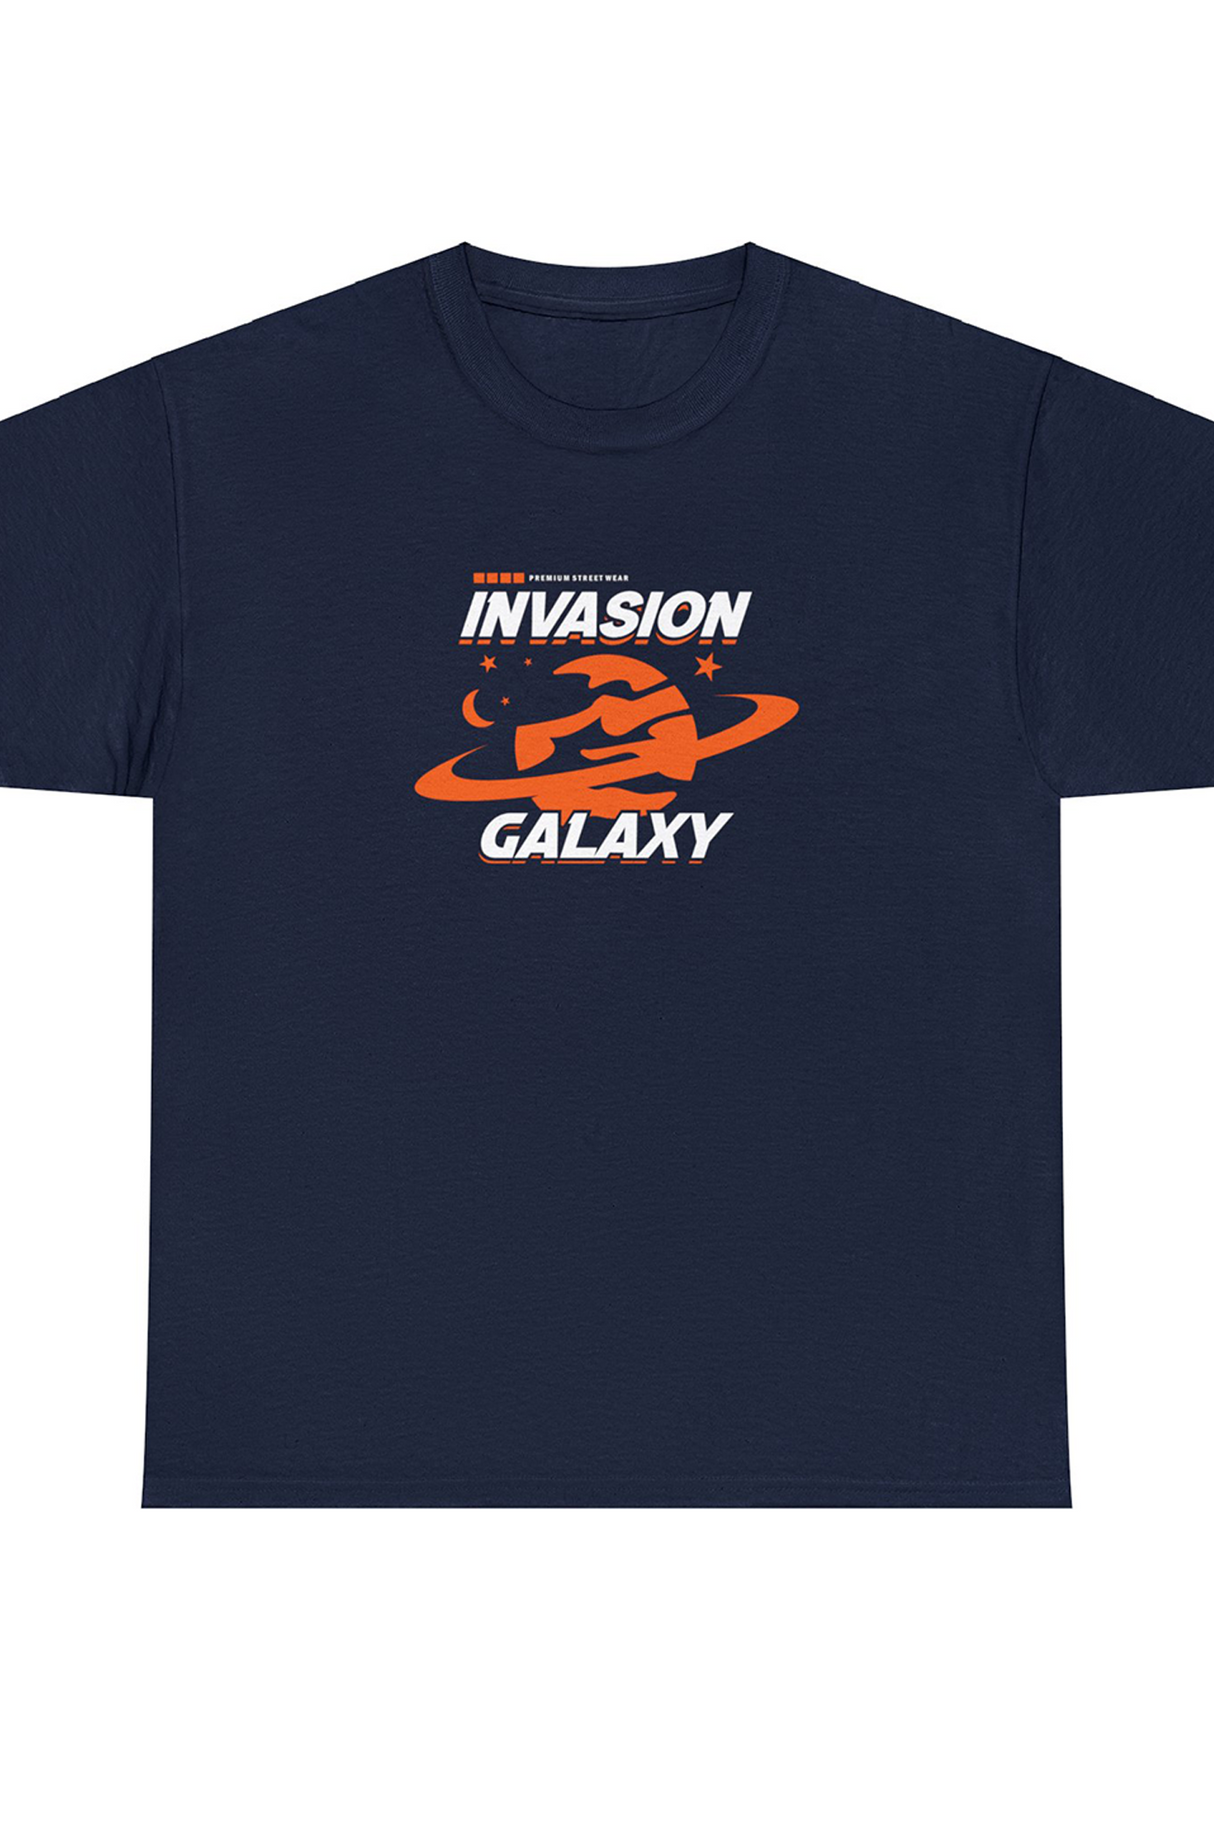 Invasion Galaxy Graphic Tee Shirt